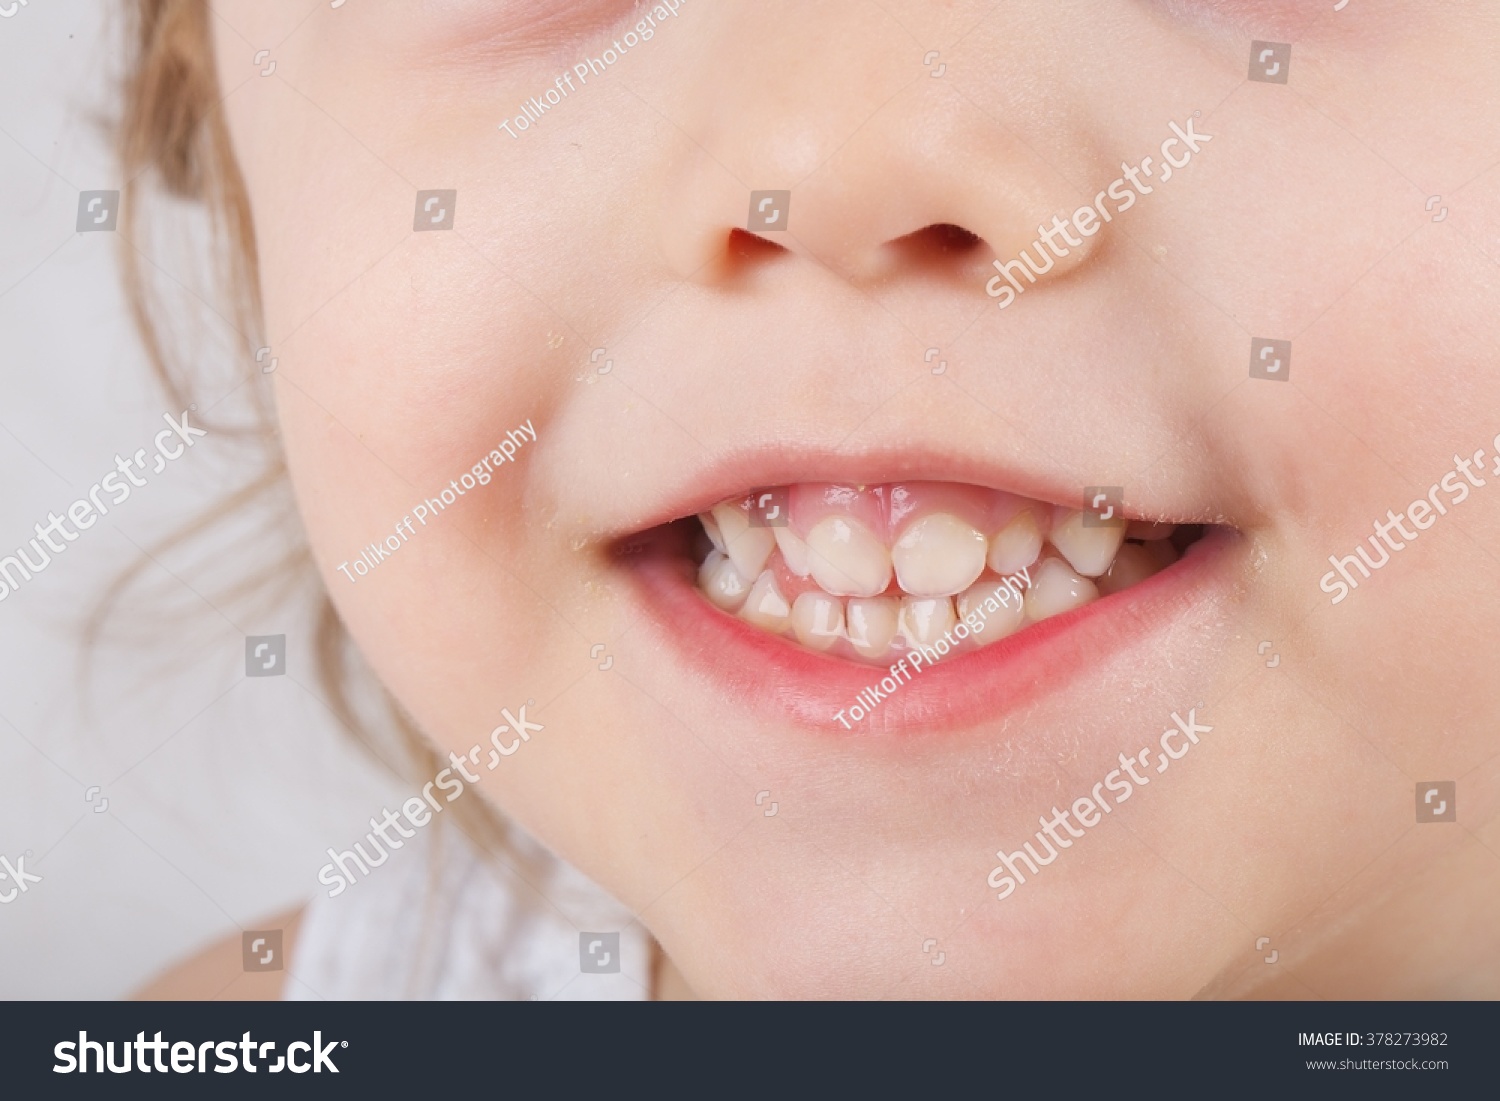 пятна на зубах у ребенка фото